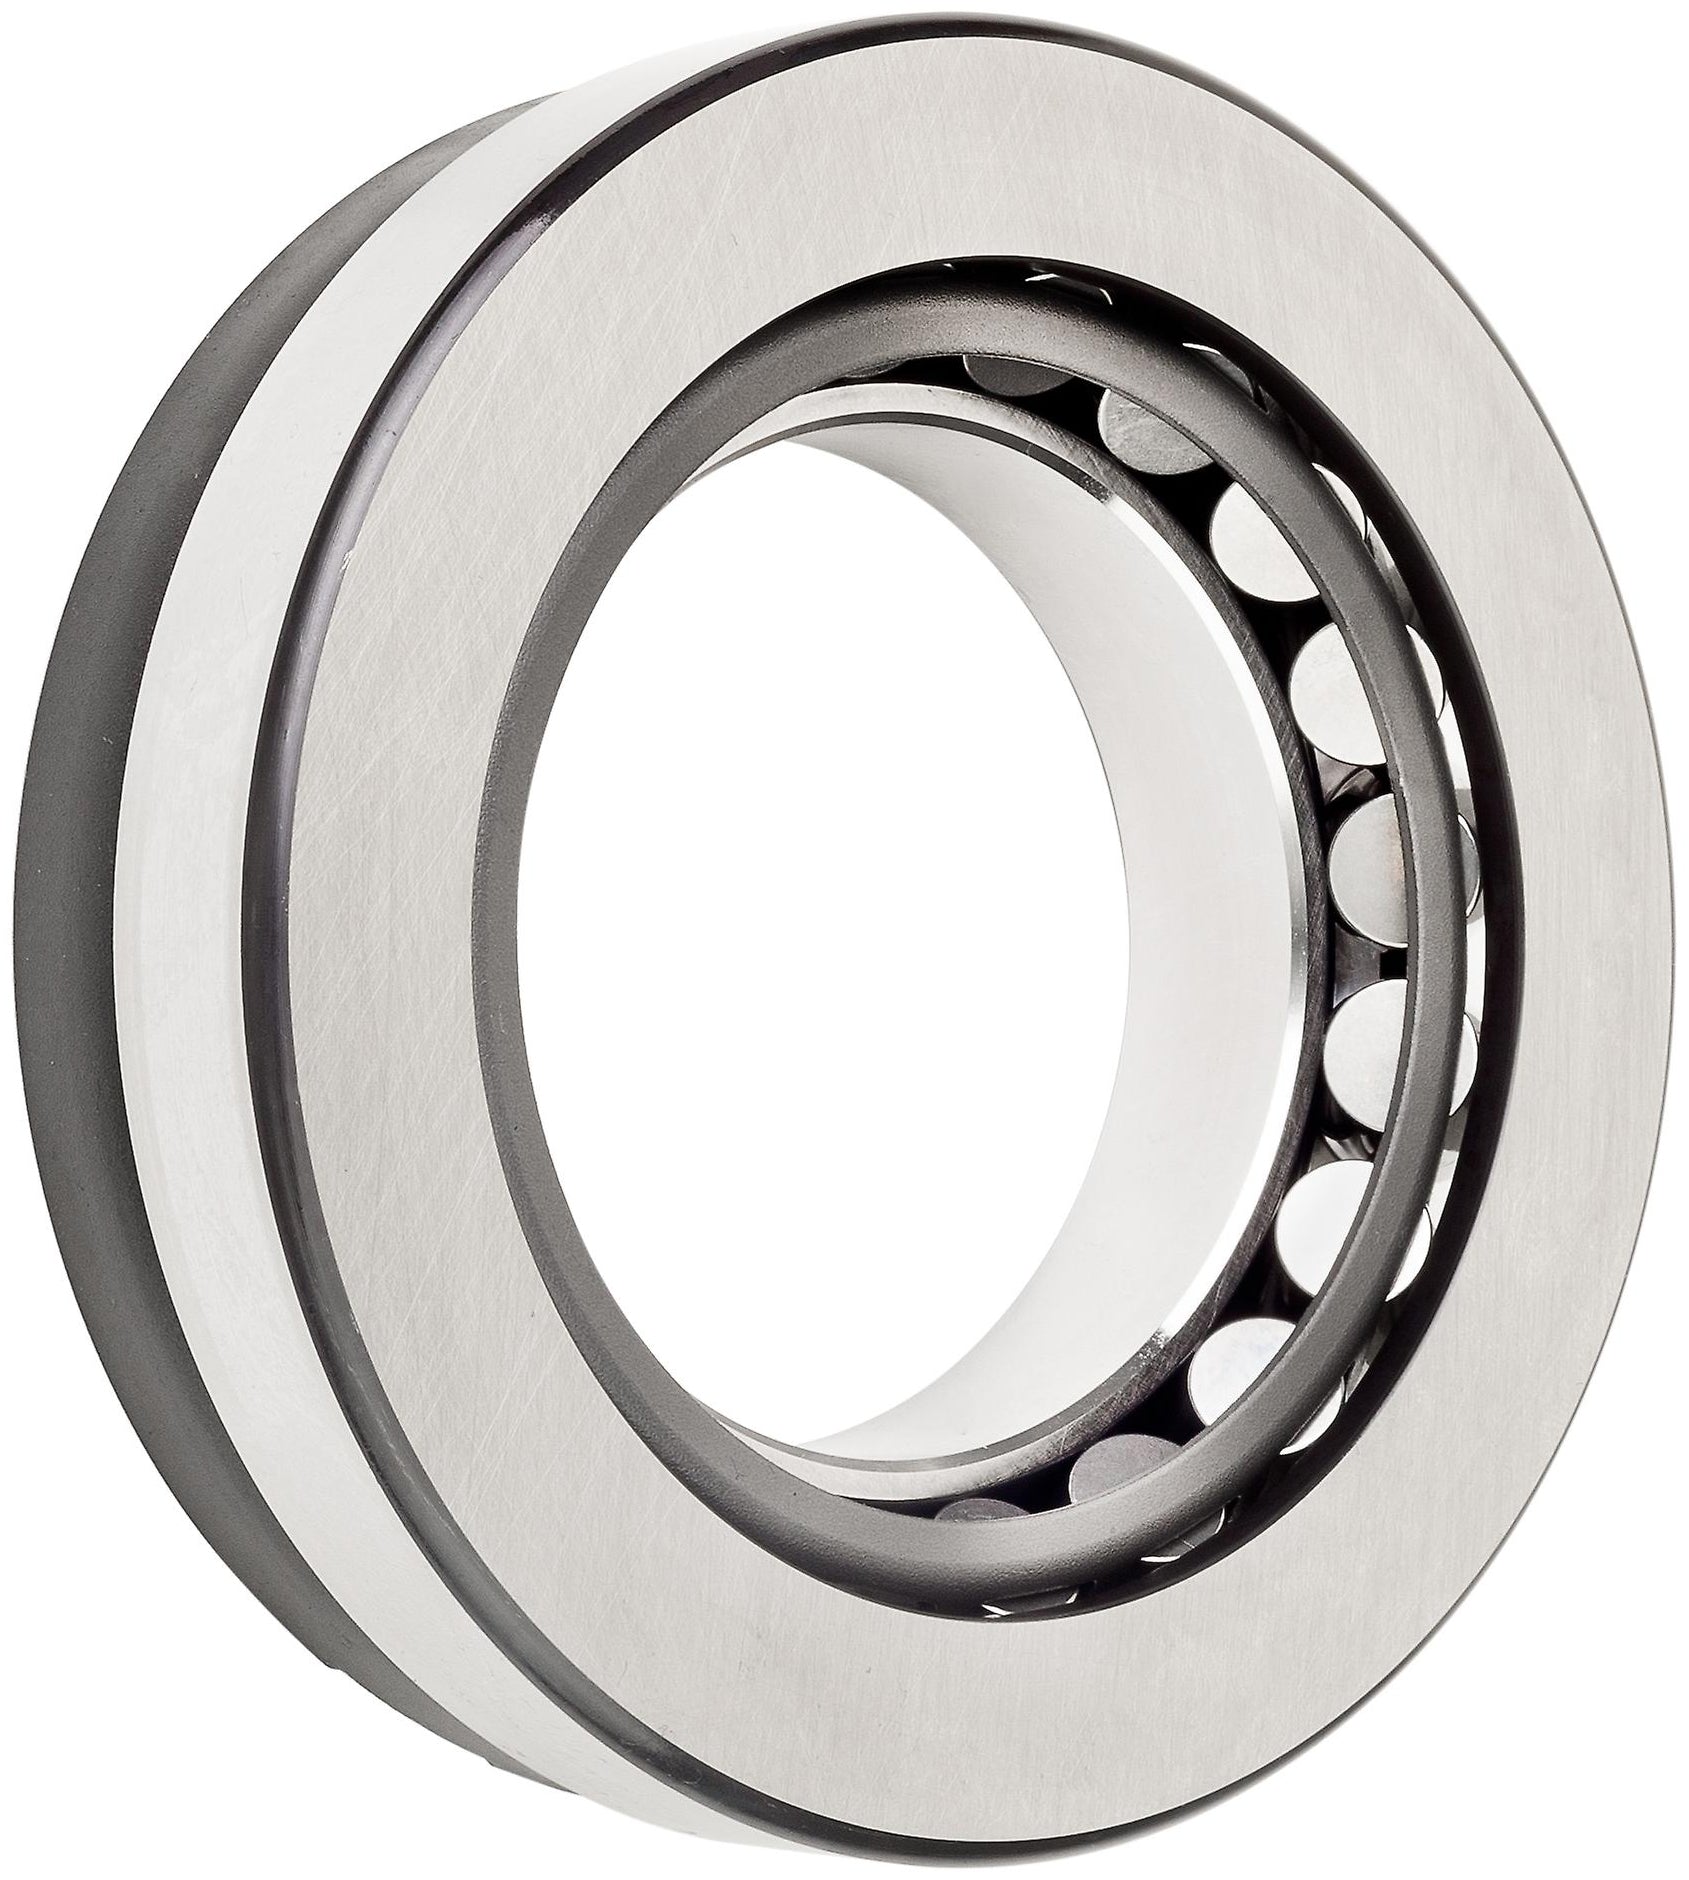 29318 NTN Spherical thrust roller bearing 90x155x39 NTN